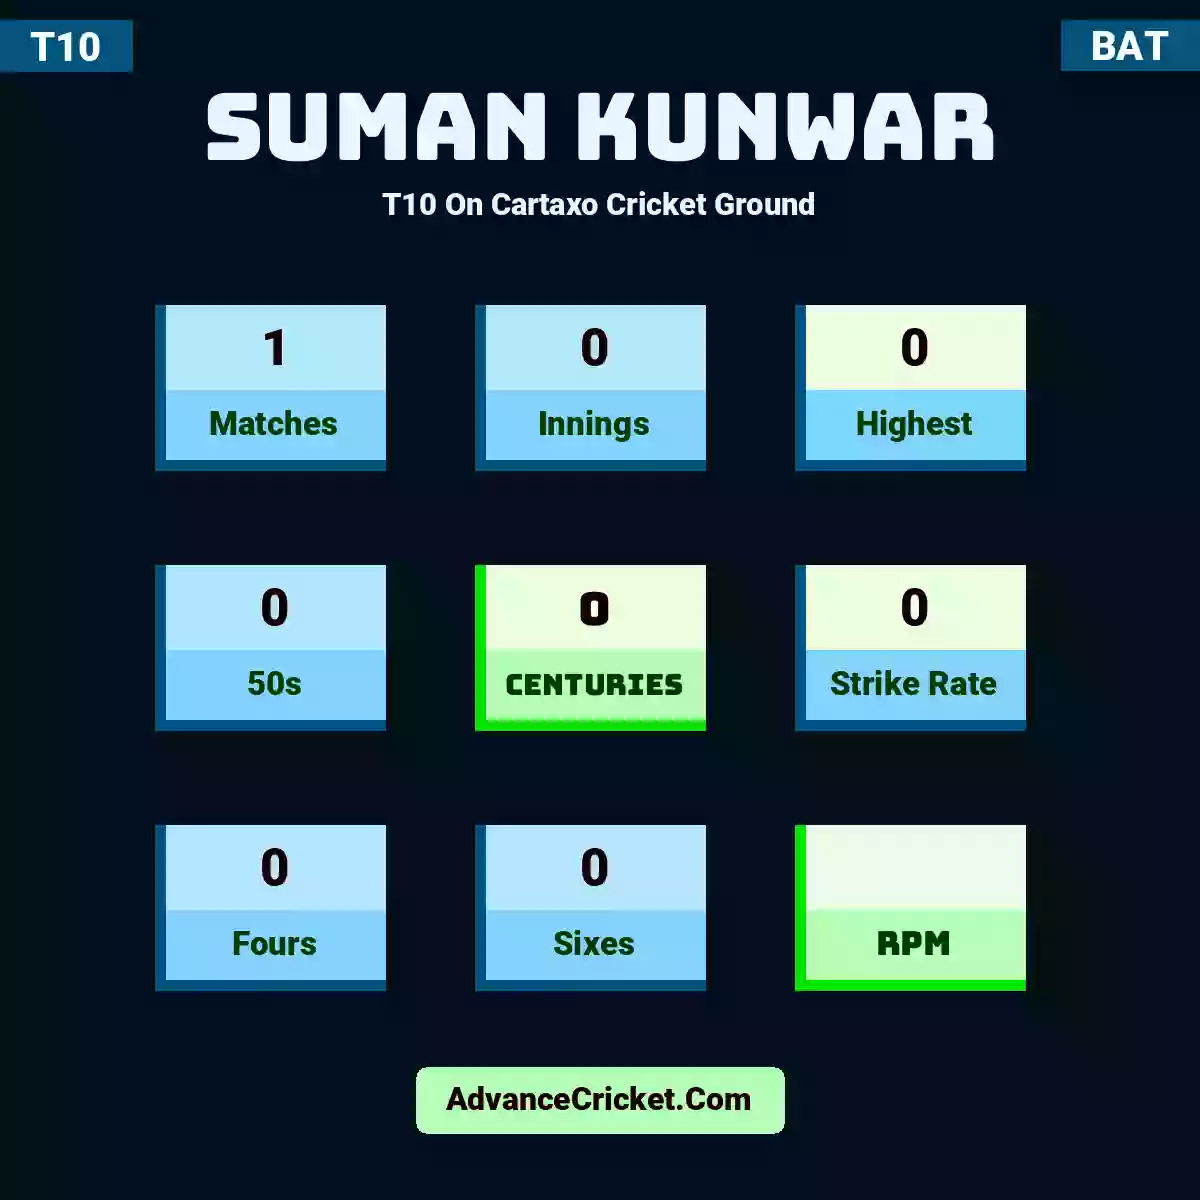 Suman Kunwar T10  On Cartaxo Cricket Ground, Suman Kunwar played 1 matches, scored 0 runs as highest, 0 half-centuries, and 0 centuries, with a strike rate of 0. S.Kunwar hit 0 fours and 0 sixes.